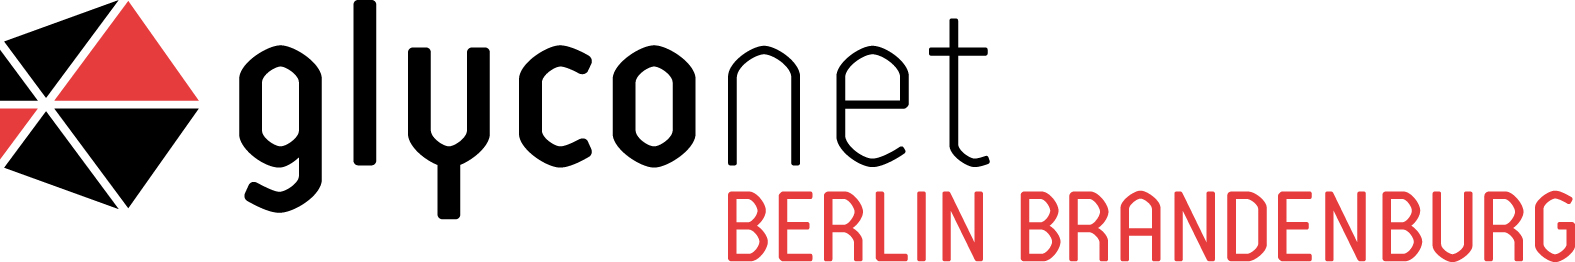 Logo Glyconet Berlin-Brandenburg